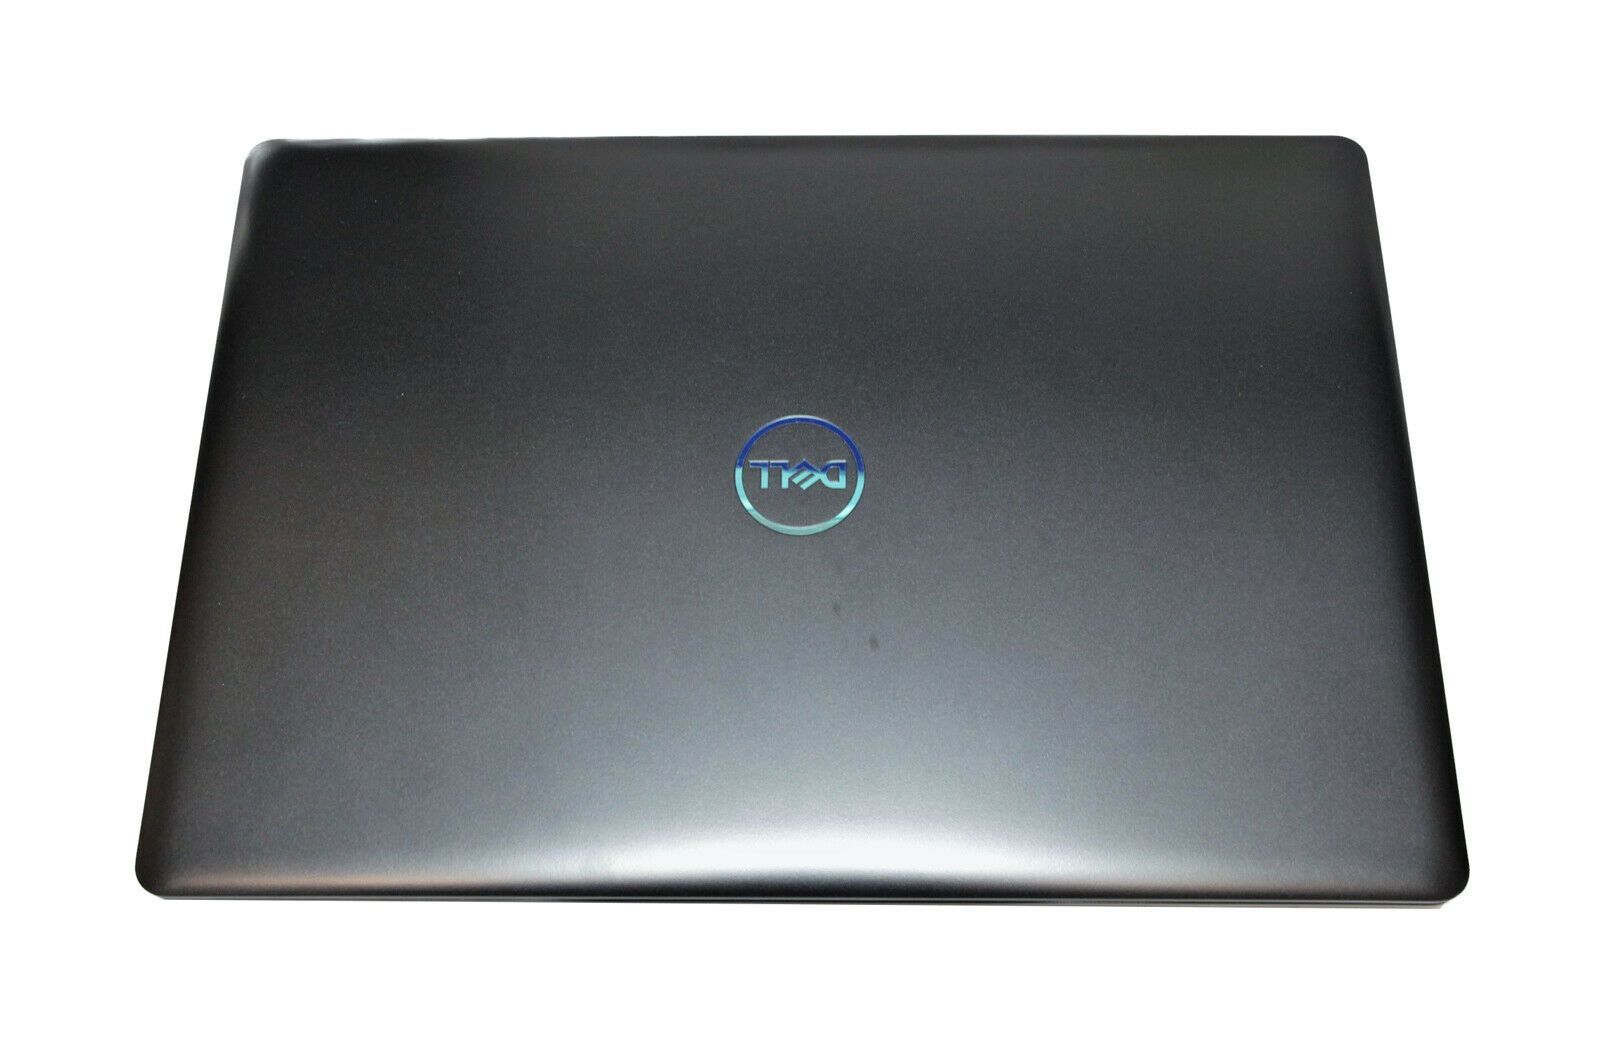 Dell G3 15 IPS Gaming Laptop: Core i7-8750H, GTX 1060 Max-Q, 256GB+1TB, 16GB RAM - CruiseTech